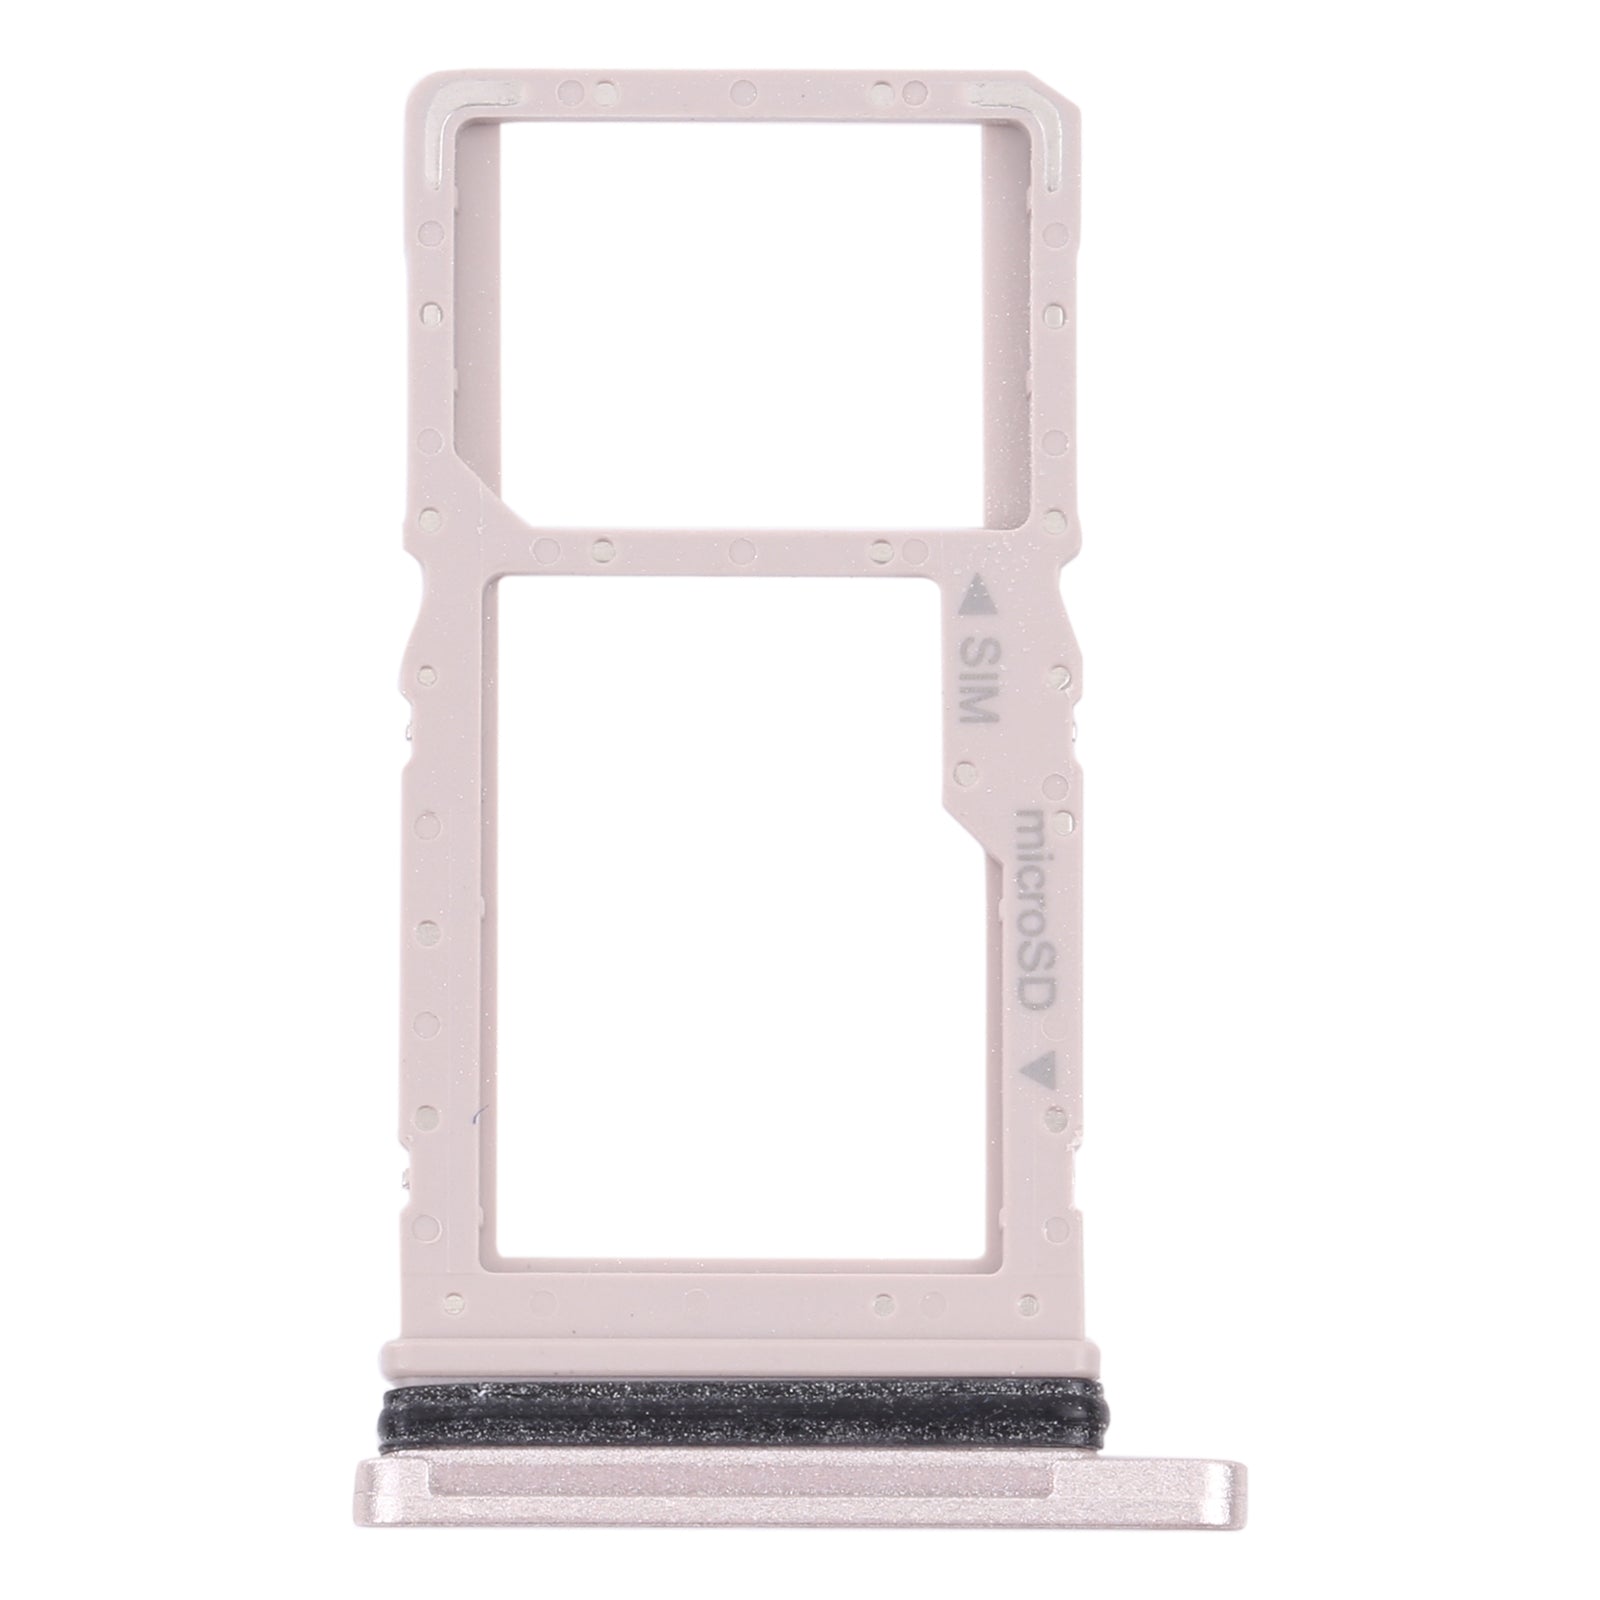 SIM / Micro SD Holder Tray Samsung Galaxy Tab A7 10.4 2020 T505 Gold